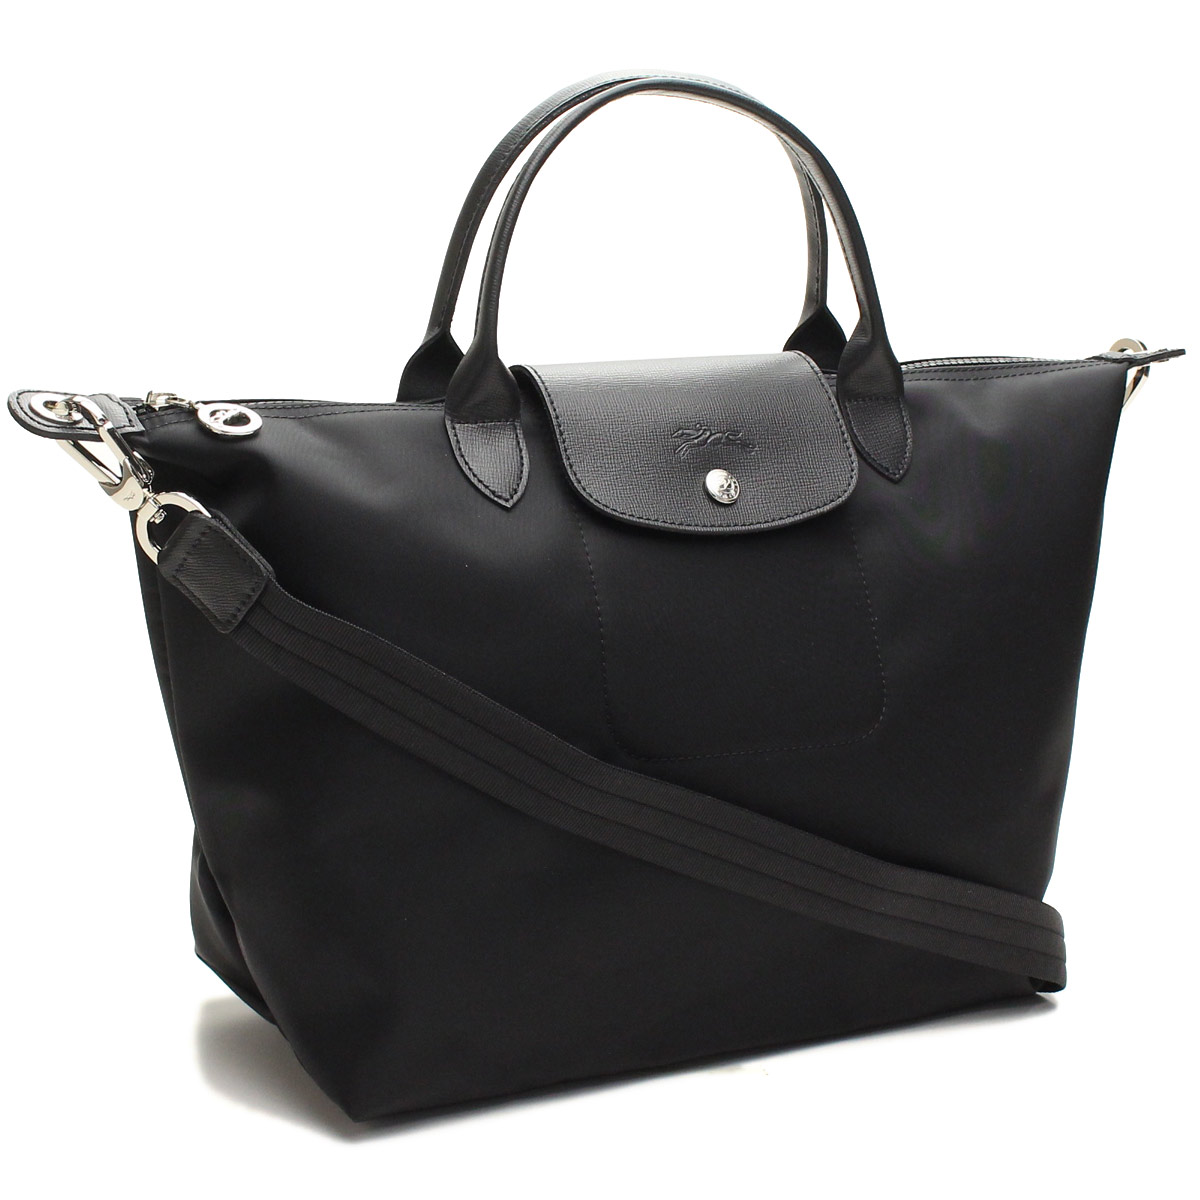 Authentic Longchamp Bag Price Philippines | NAR Media Kit